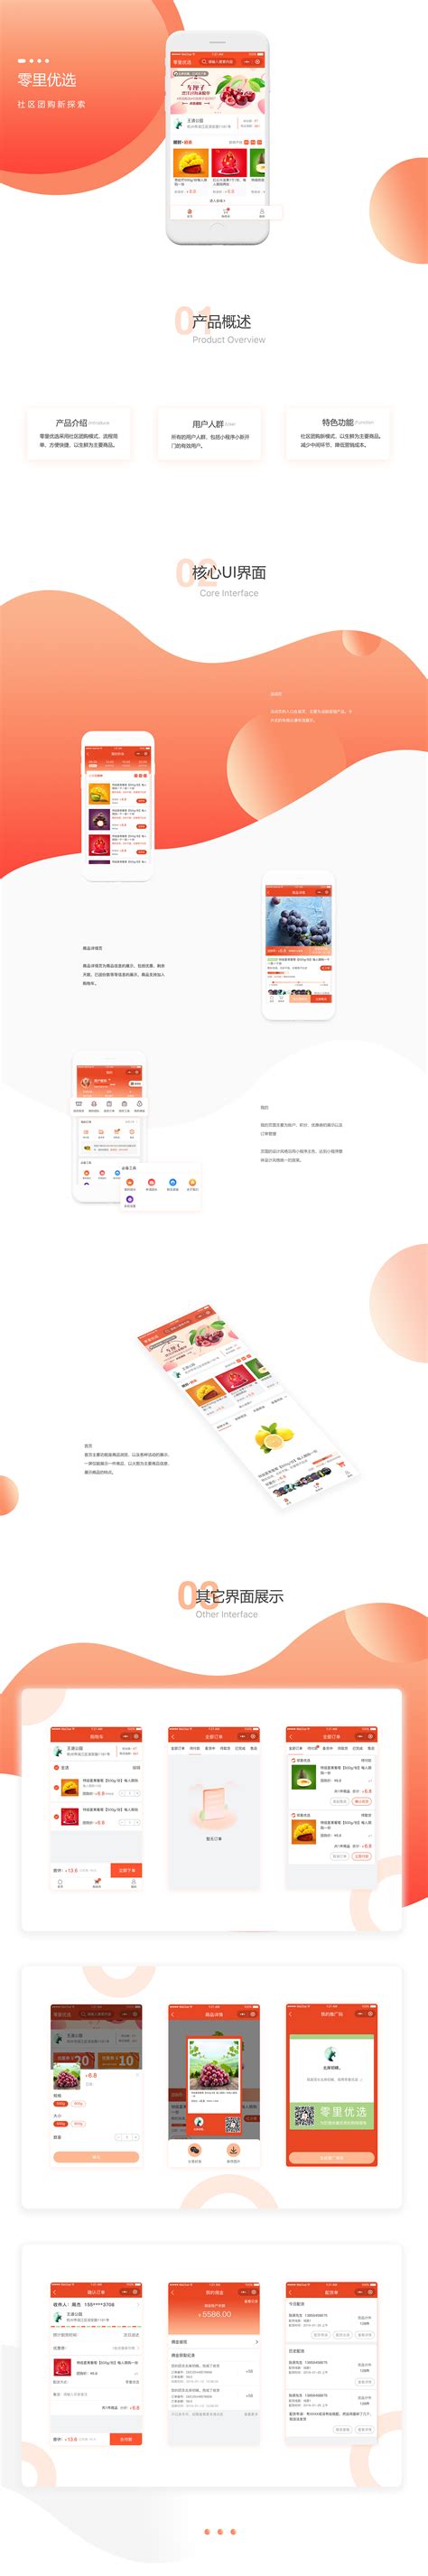 国外购物网站Banner设计欣赏0114 - - 大美工dameigong.cn